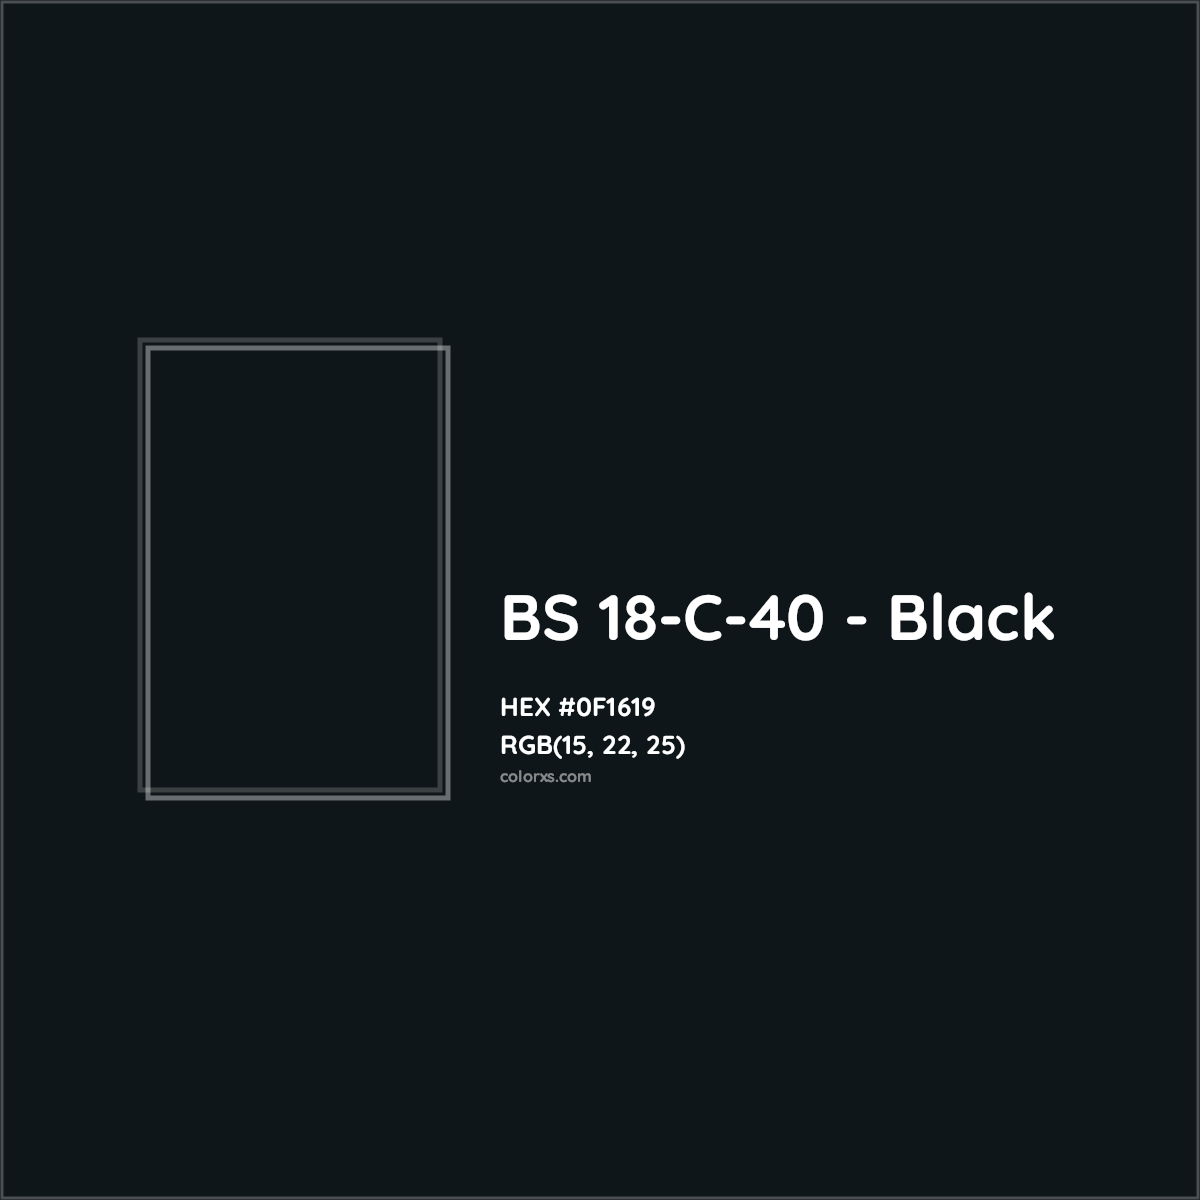 HEX #0F1619 BS 18-C-40 - Black CMS British Standard 4800 - Color Code